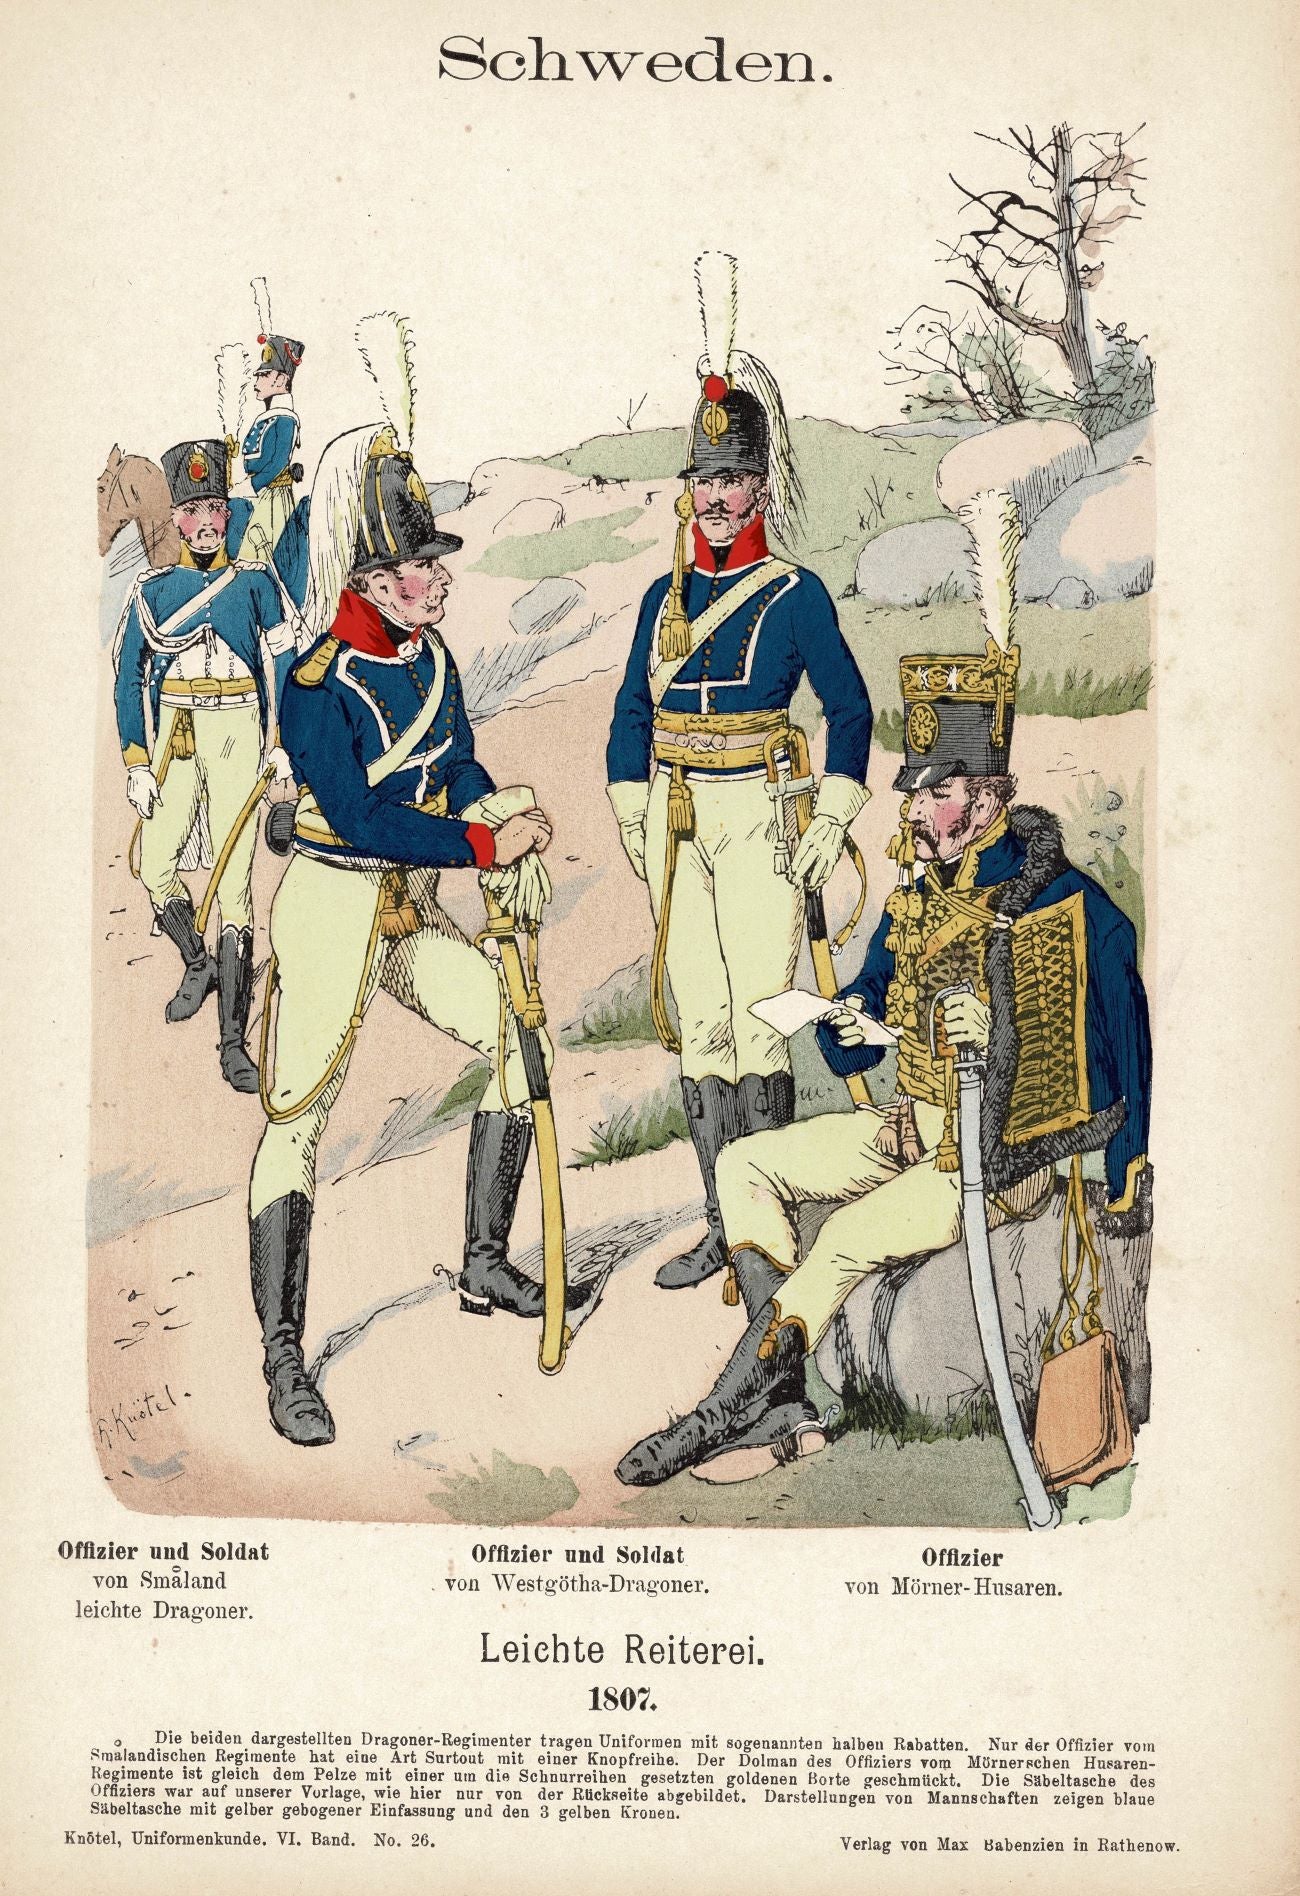 Swedish Light Cavalry Uniforms from 1807 by Richard Knötel, 1895